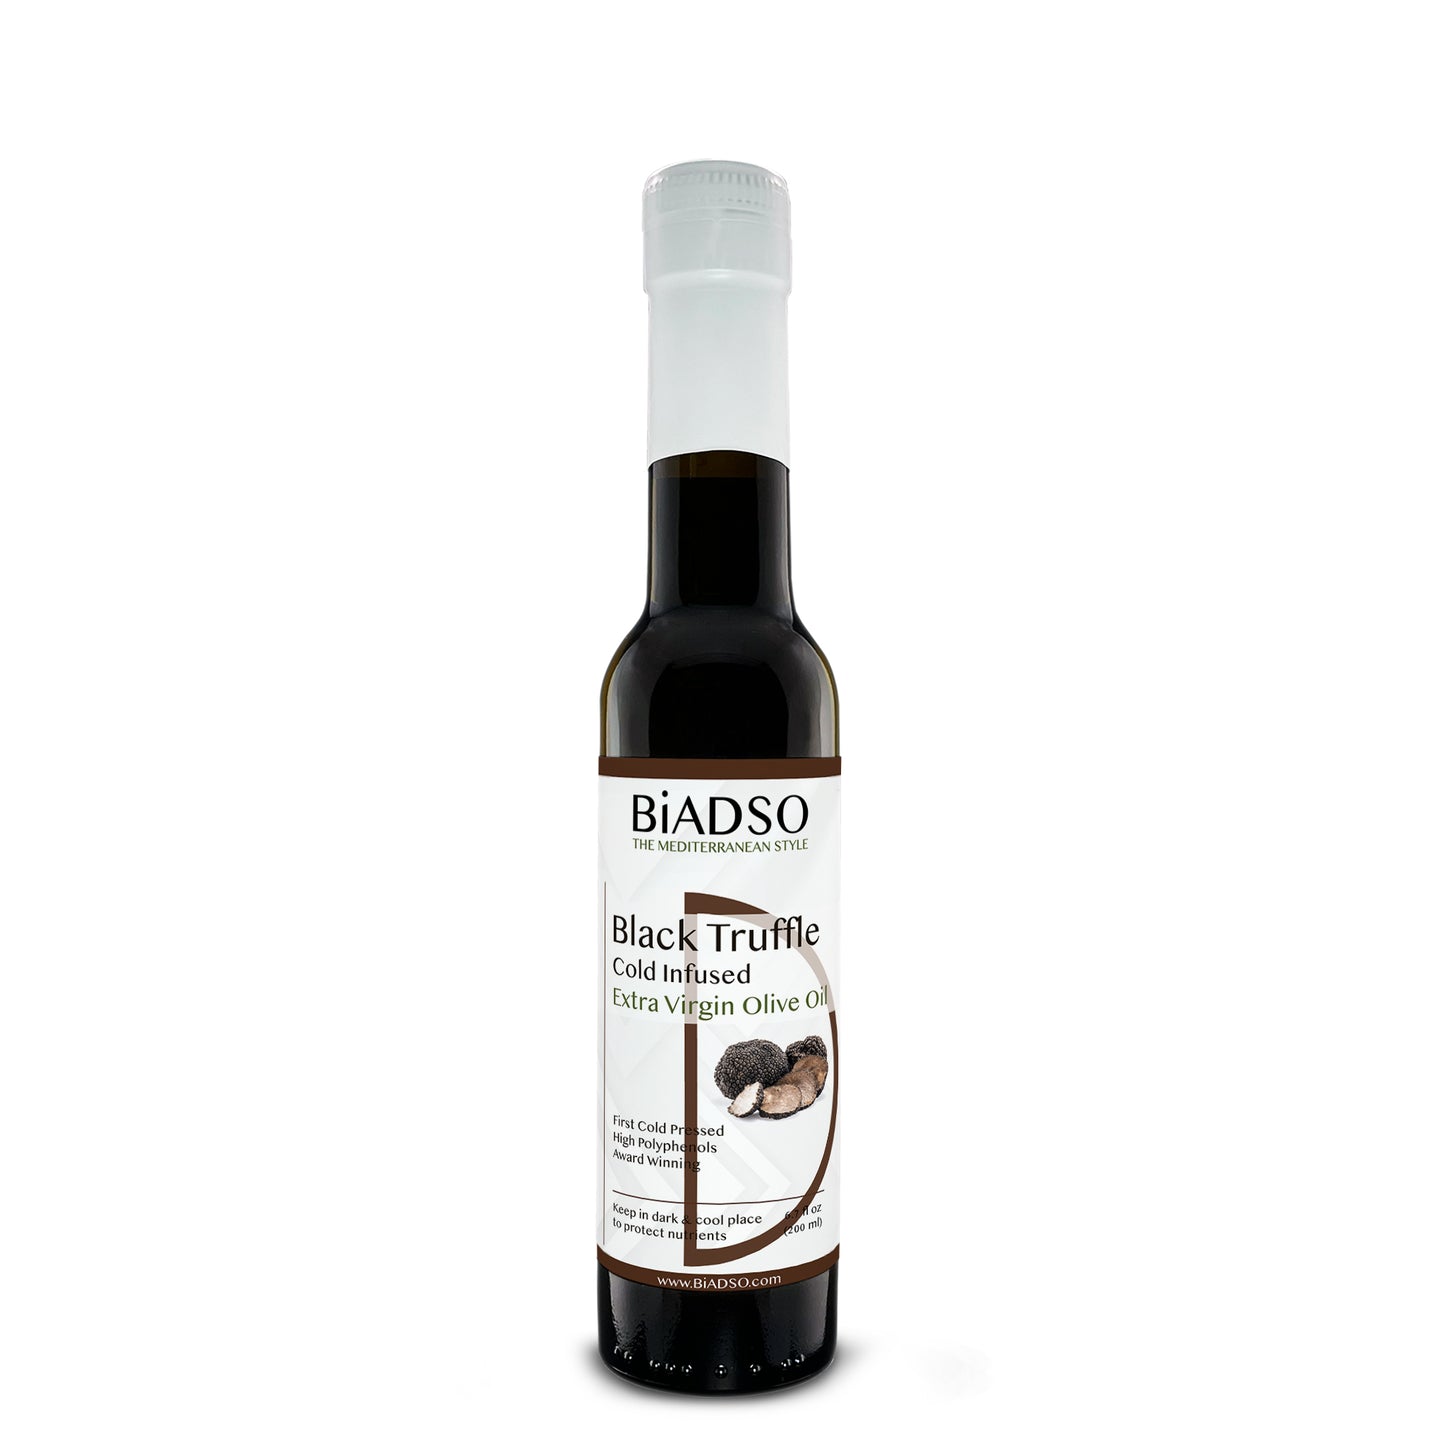 Black Truffle Oil Biadso Mediterranean Oils and Vinegars